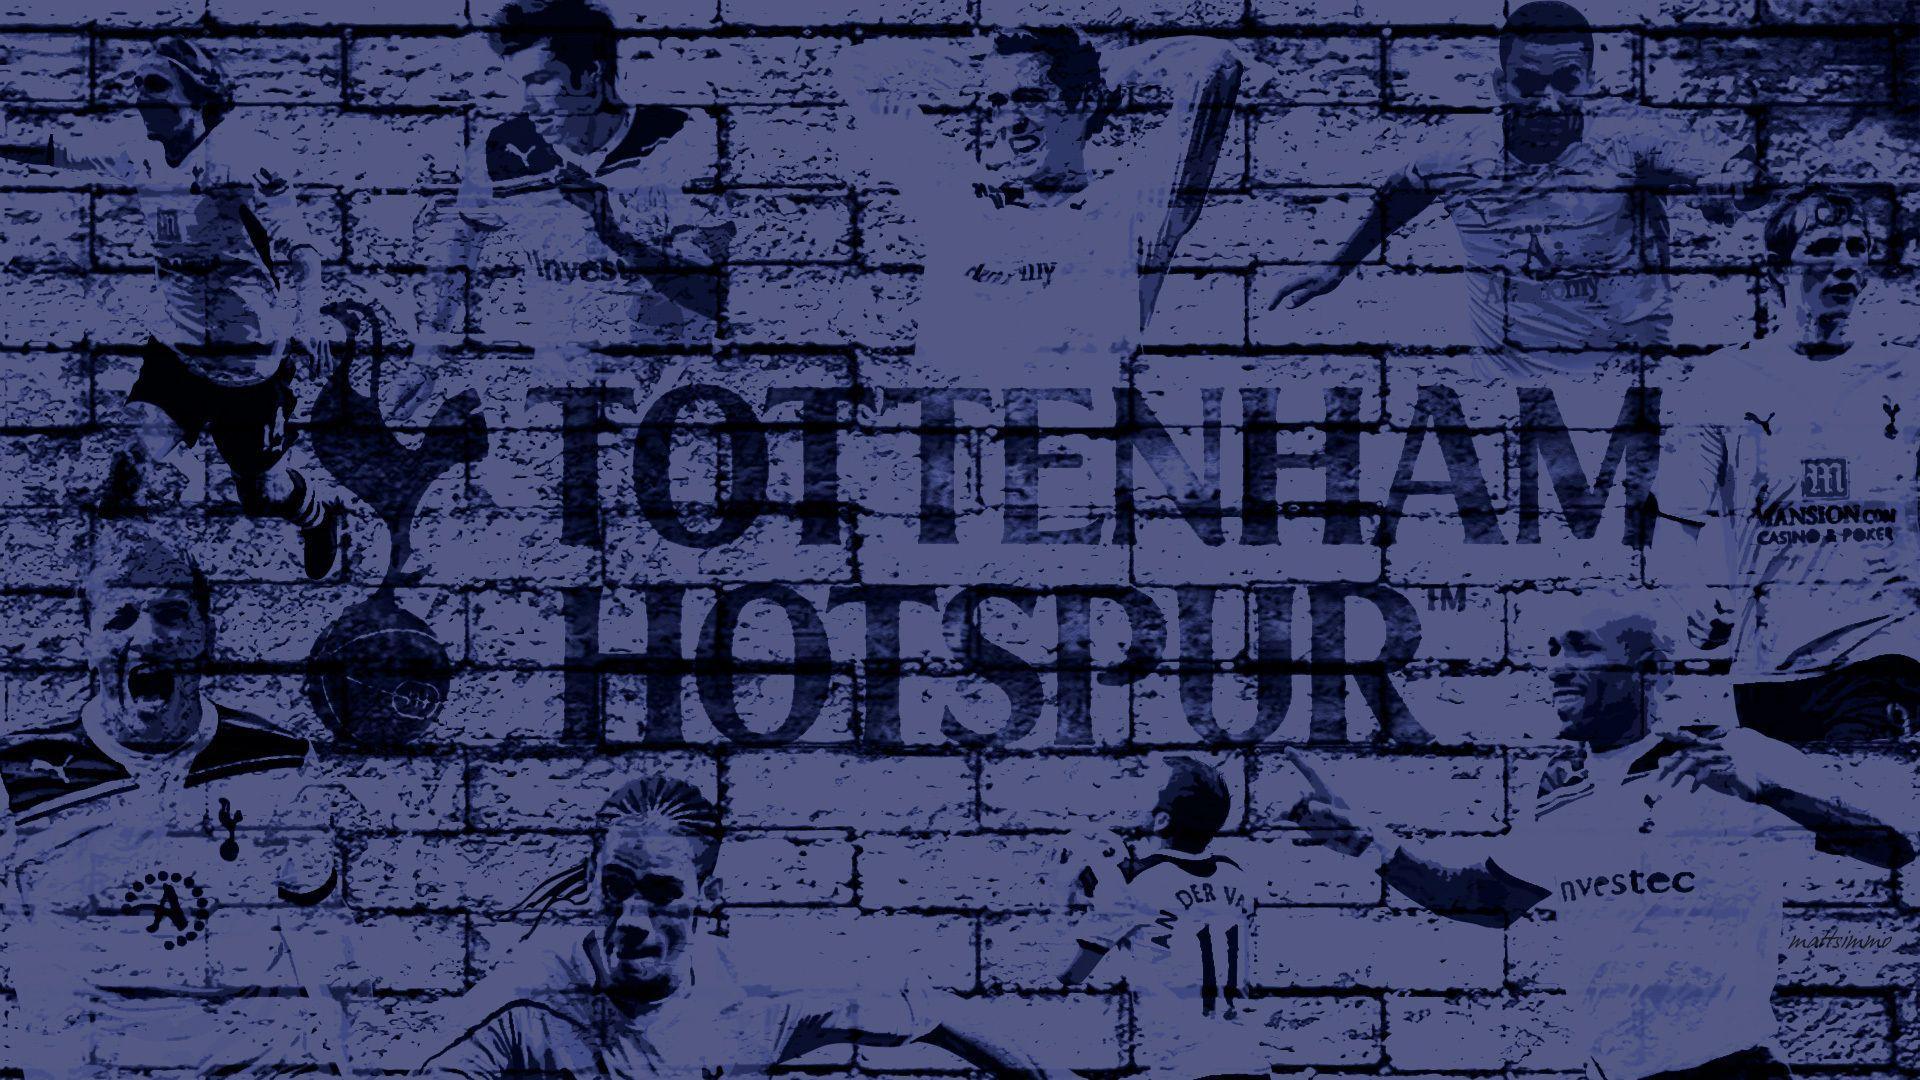 Tottenham Hotspur Wallpaper Image Photo Picture Background